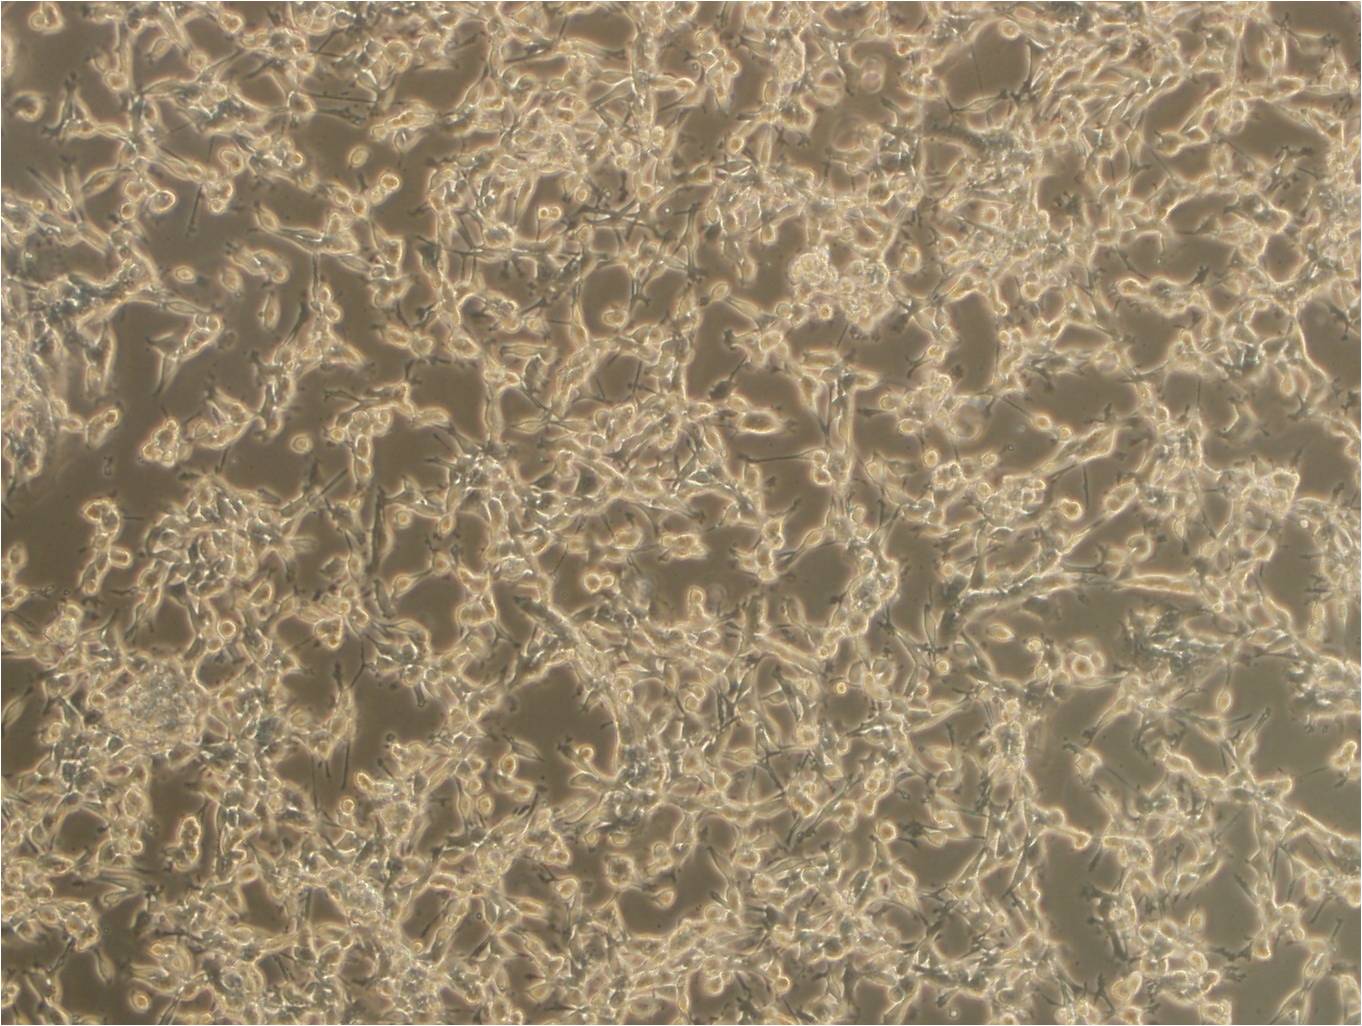 SNU-869 Cells|人胆管癌克隆细胞,SNU-869 Cells